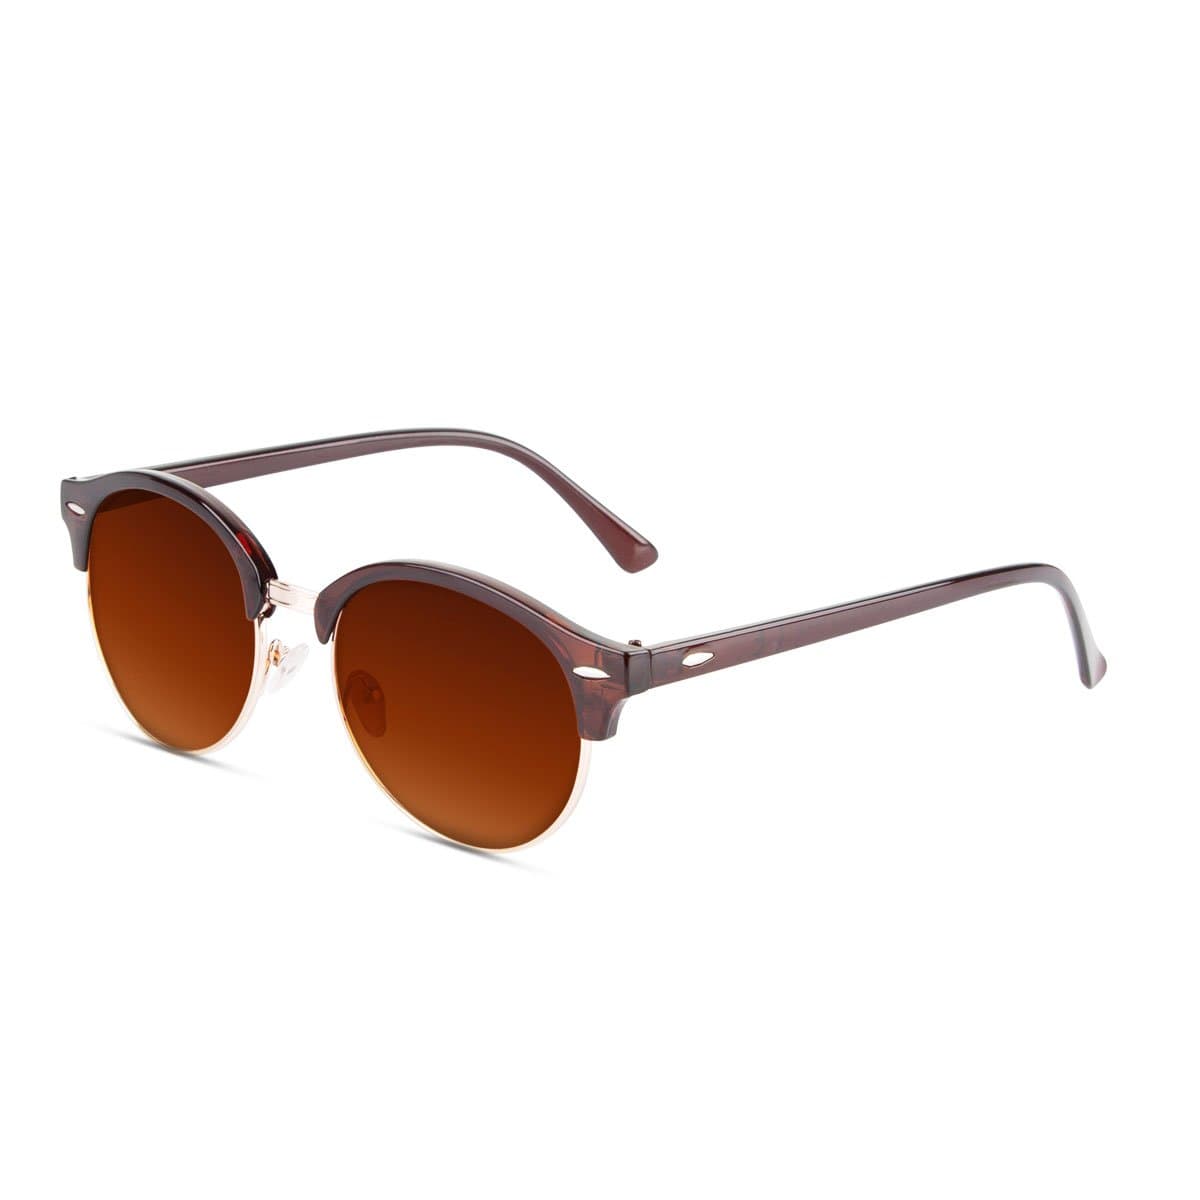 Tatura Shinny Brown Gold / Brown Sunglasses